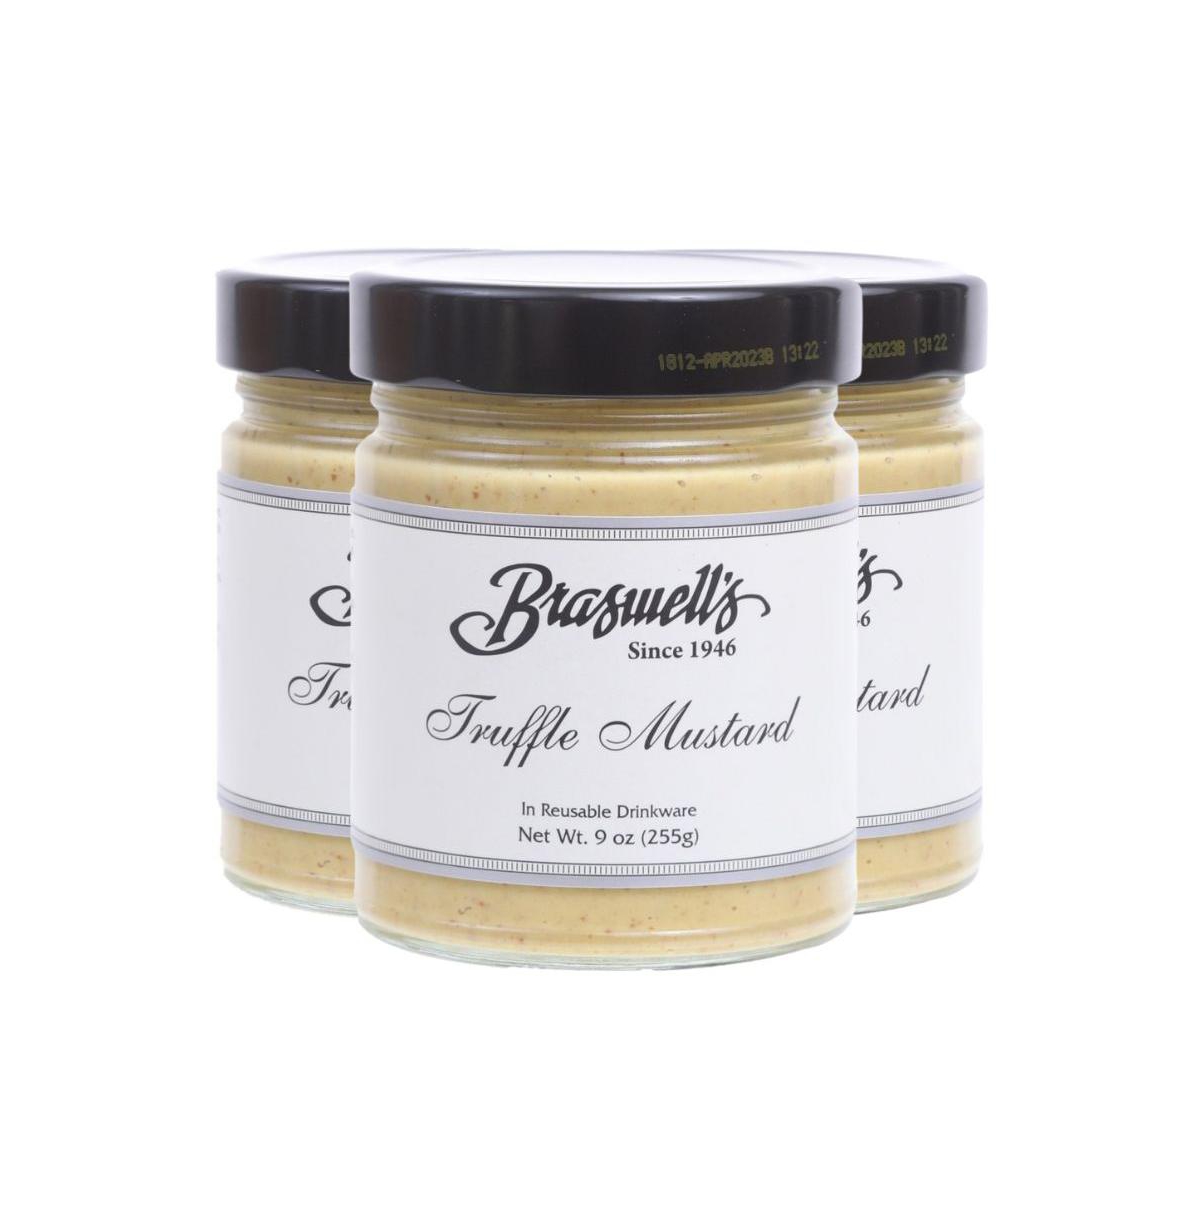 Braswells Gourmet Truffle Mustard 9 oz (3 Pack)